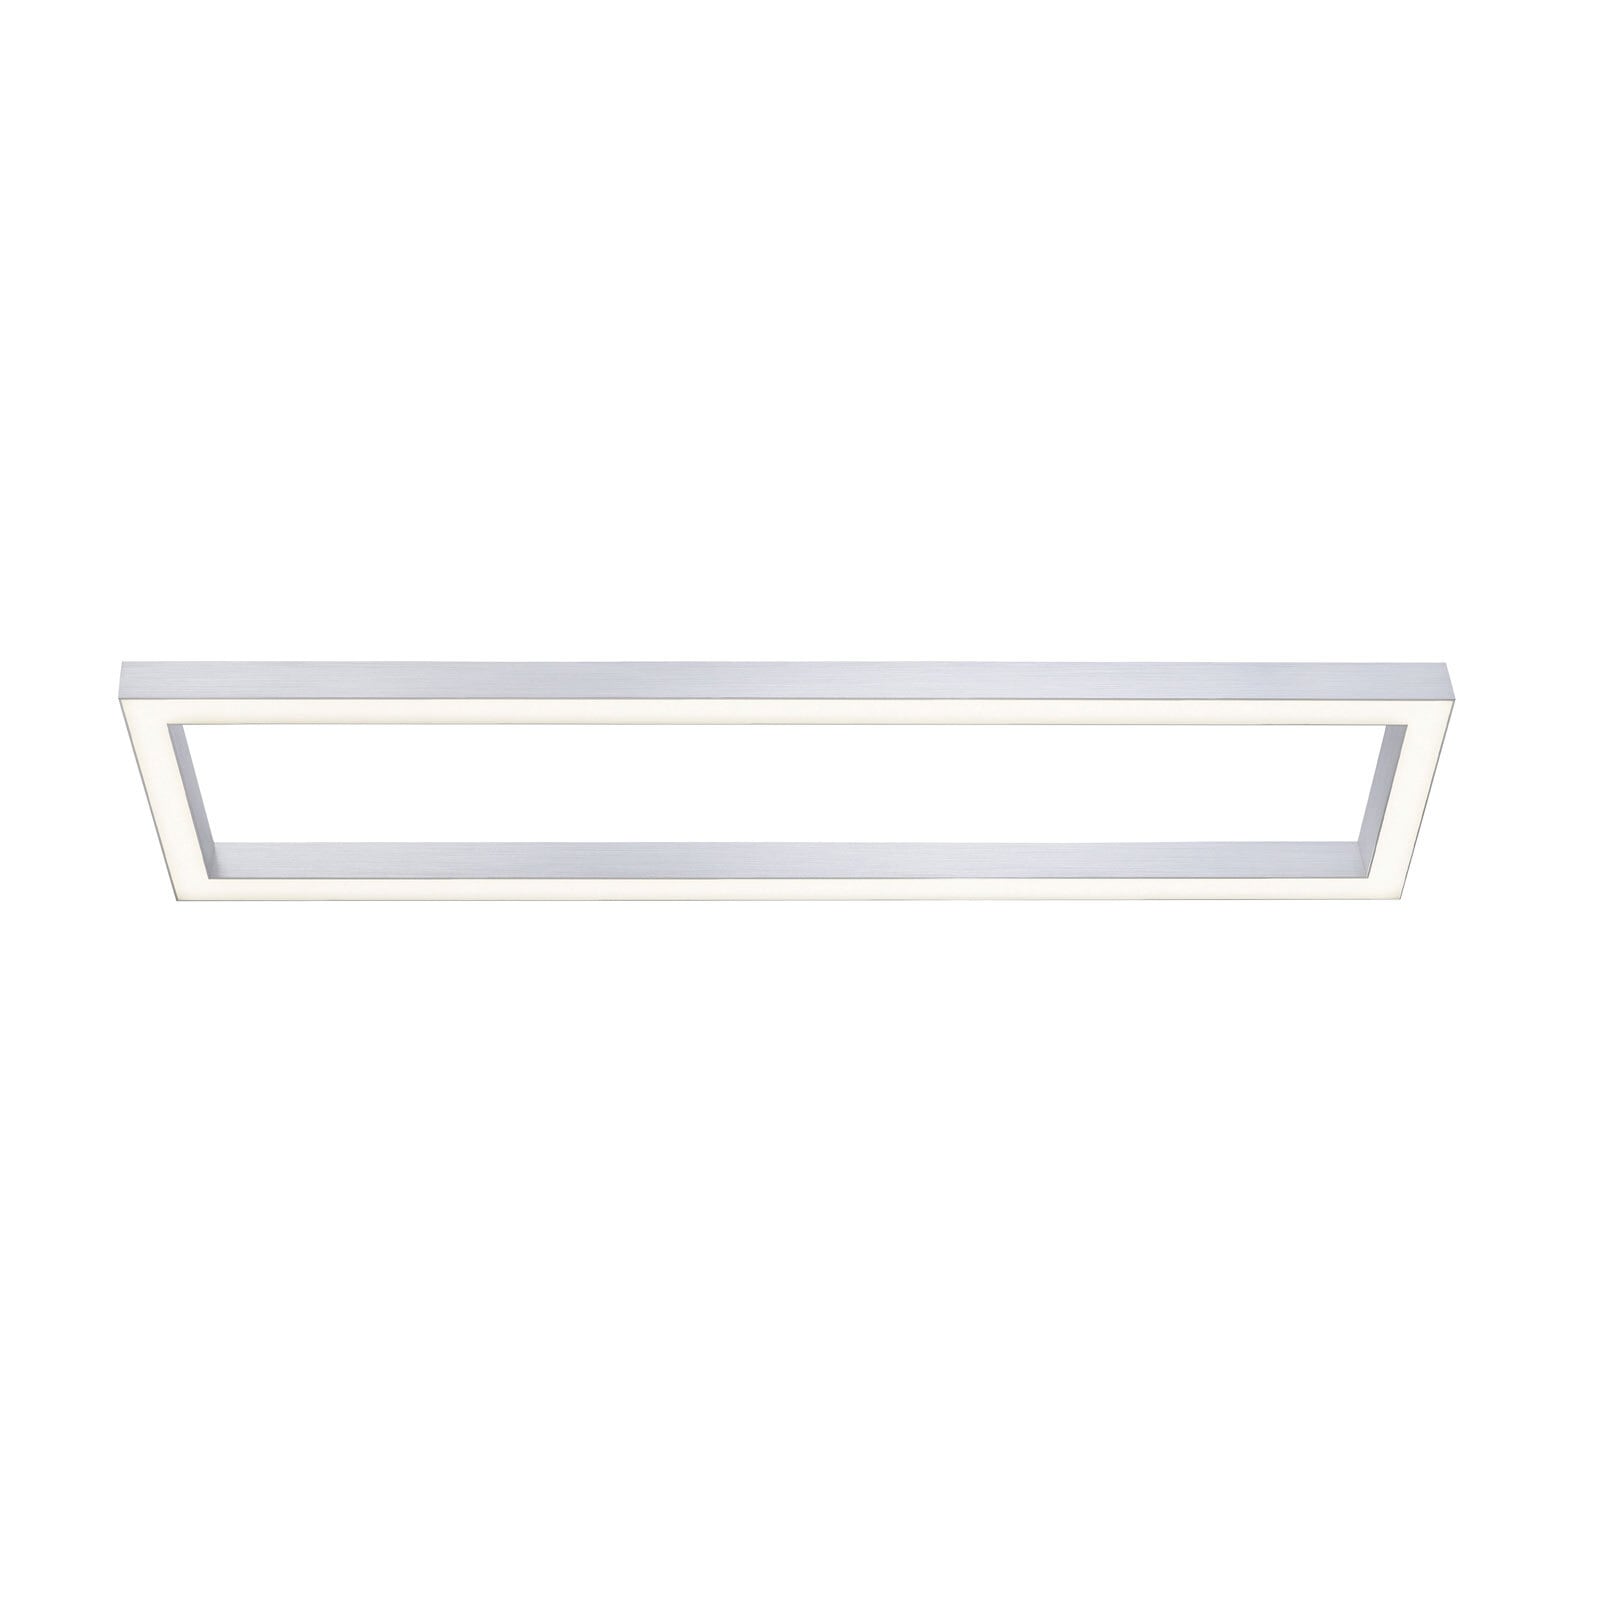 Paul Neuhaus LED Deckenlampe PURE-LINES 110 x 30 cm alufarbig